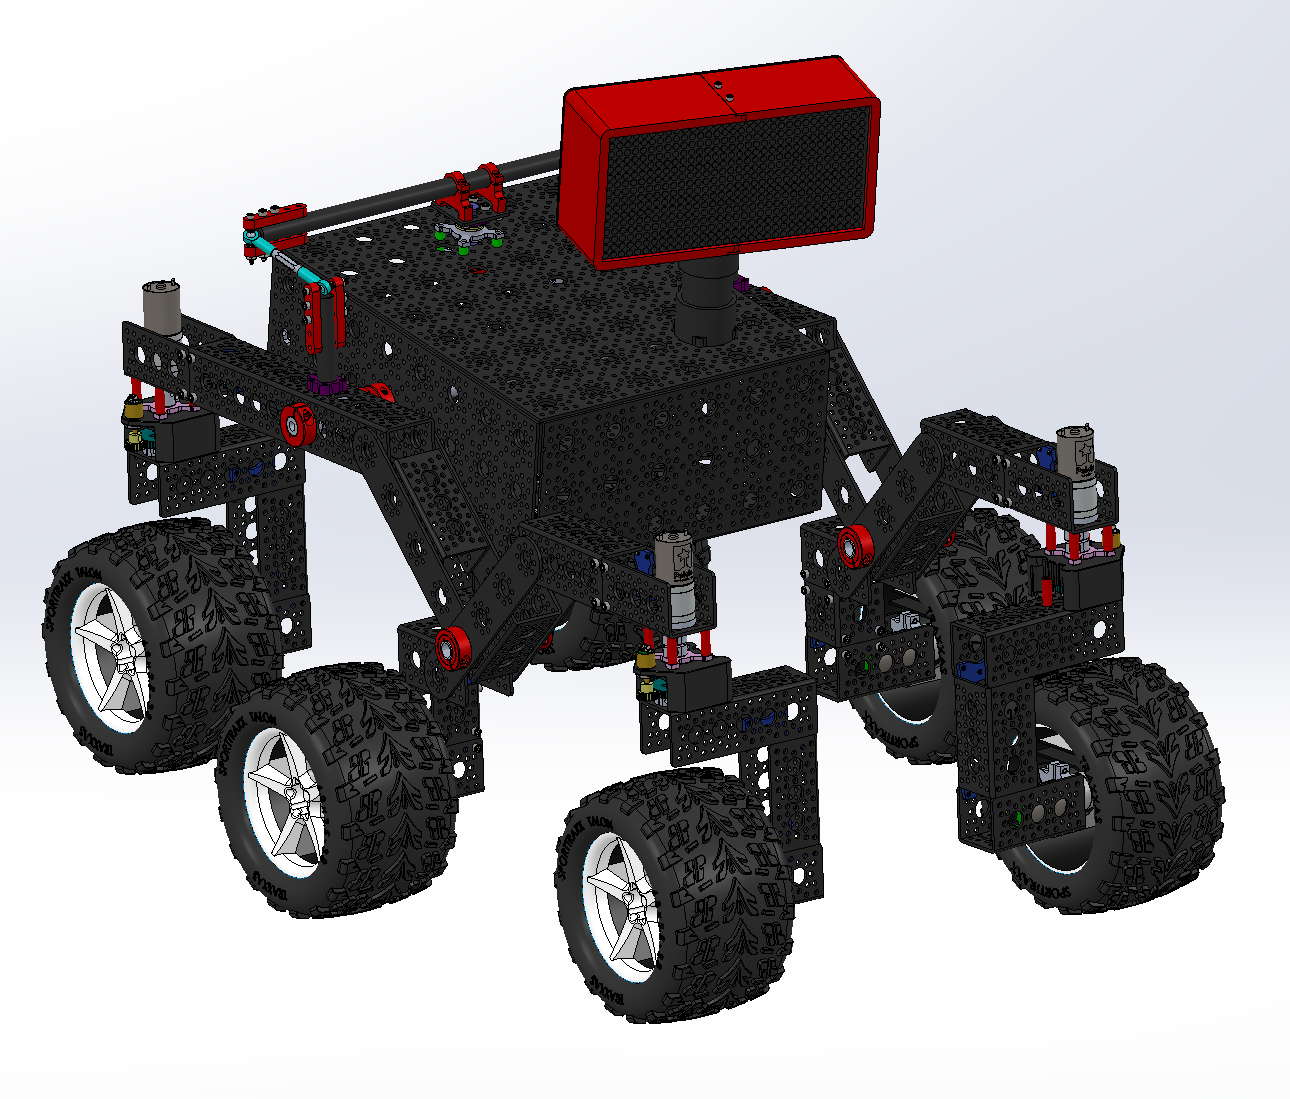 Open Source Rover